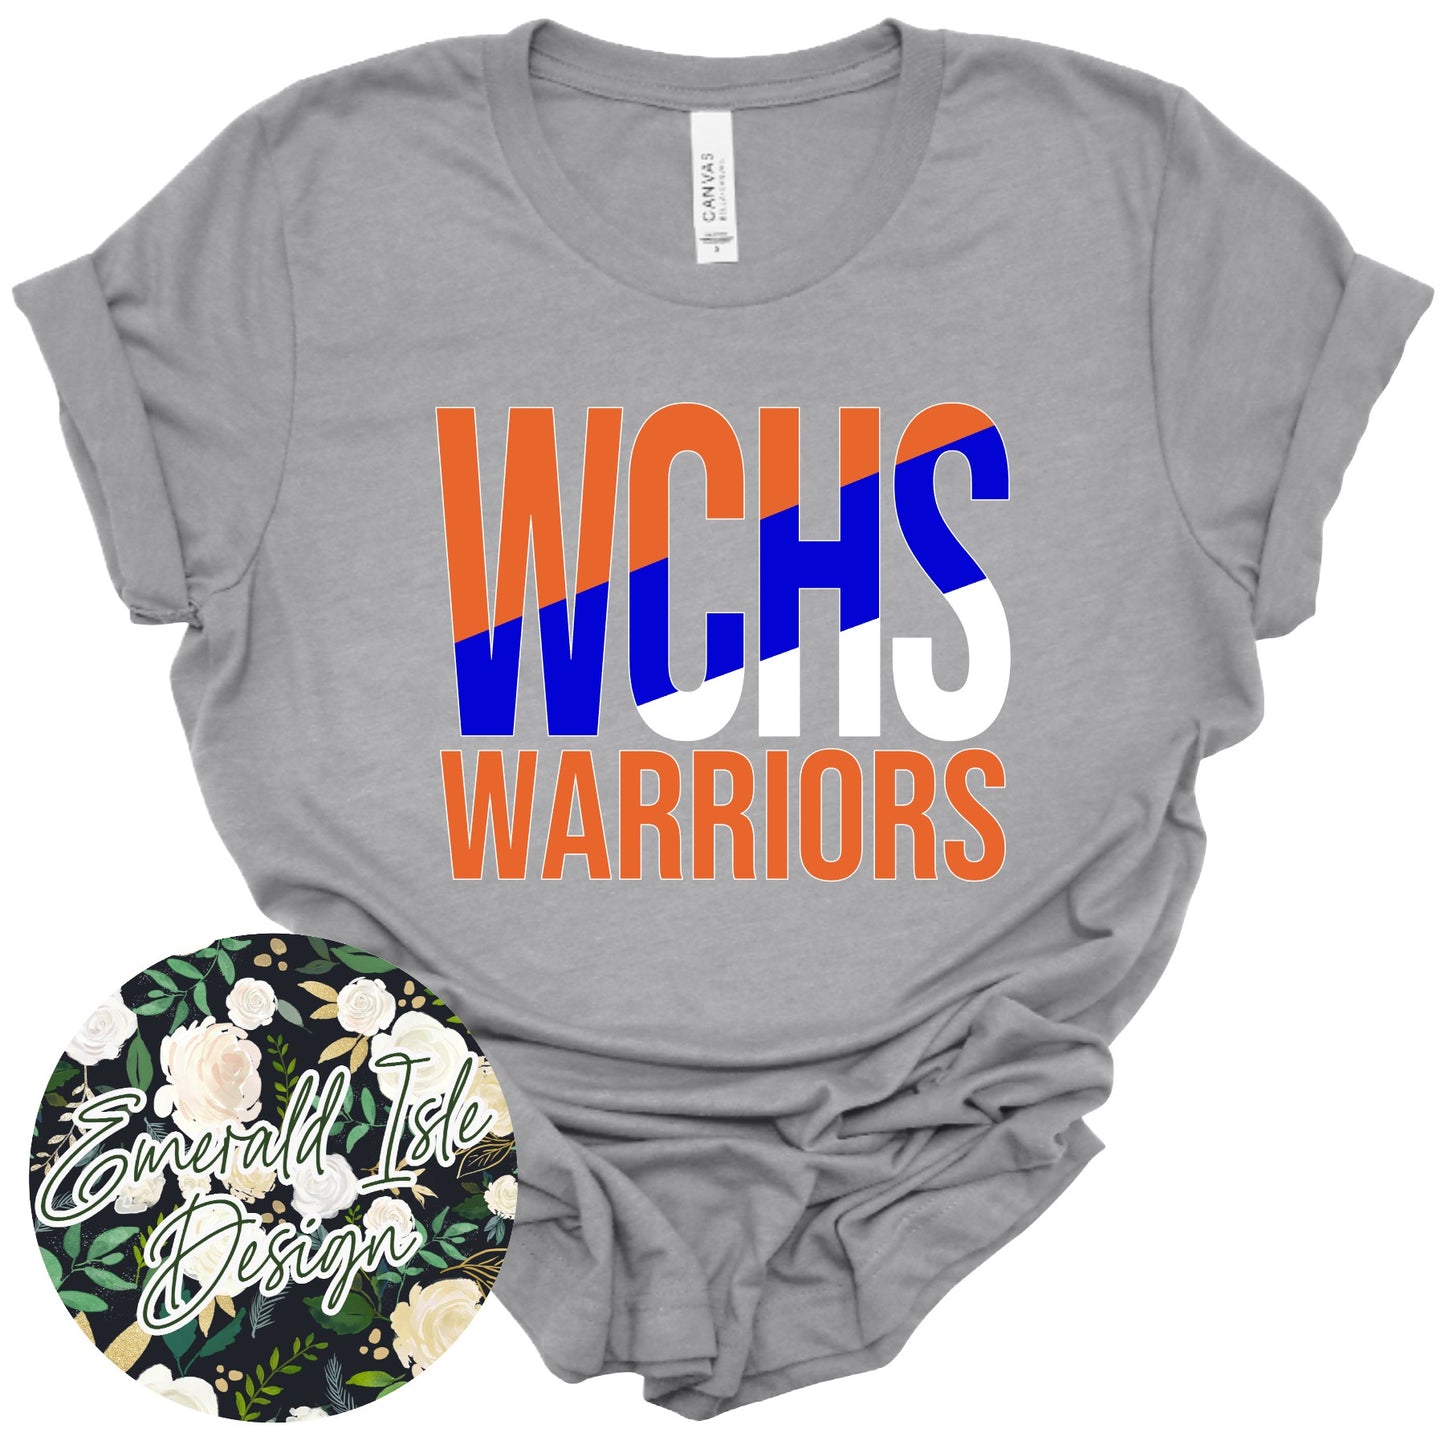 WCHS Warriors Slant Design